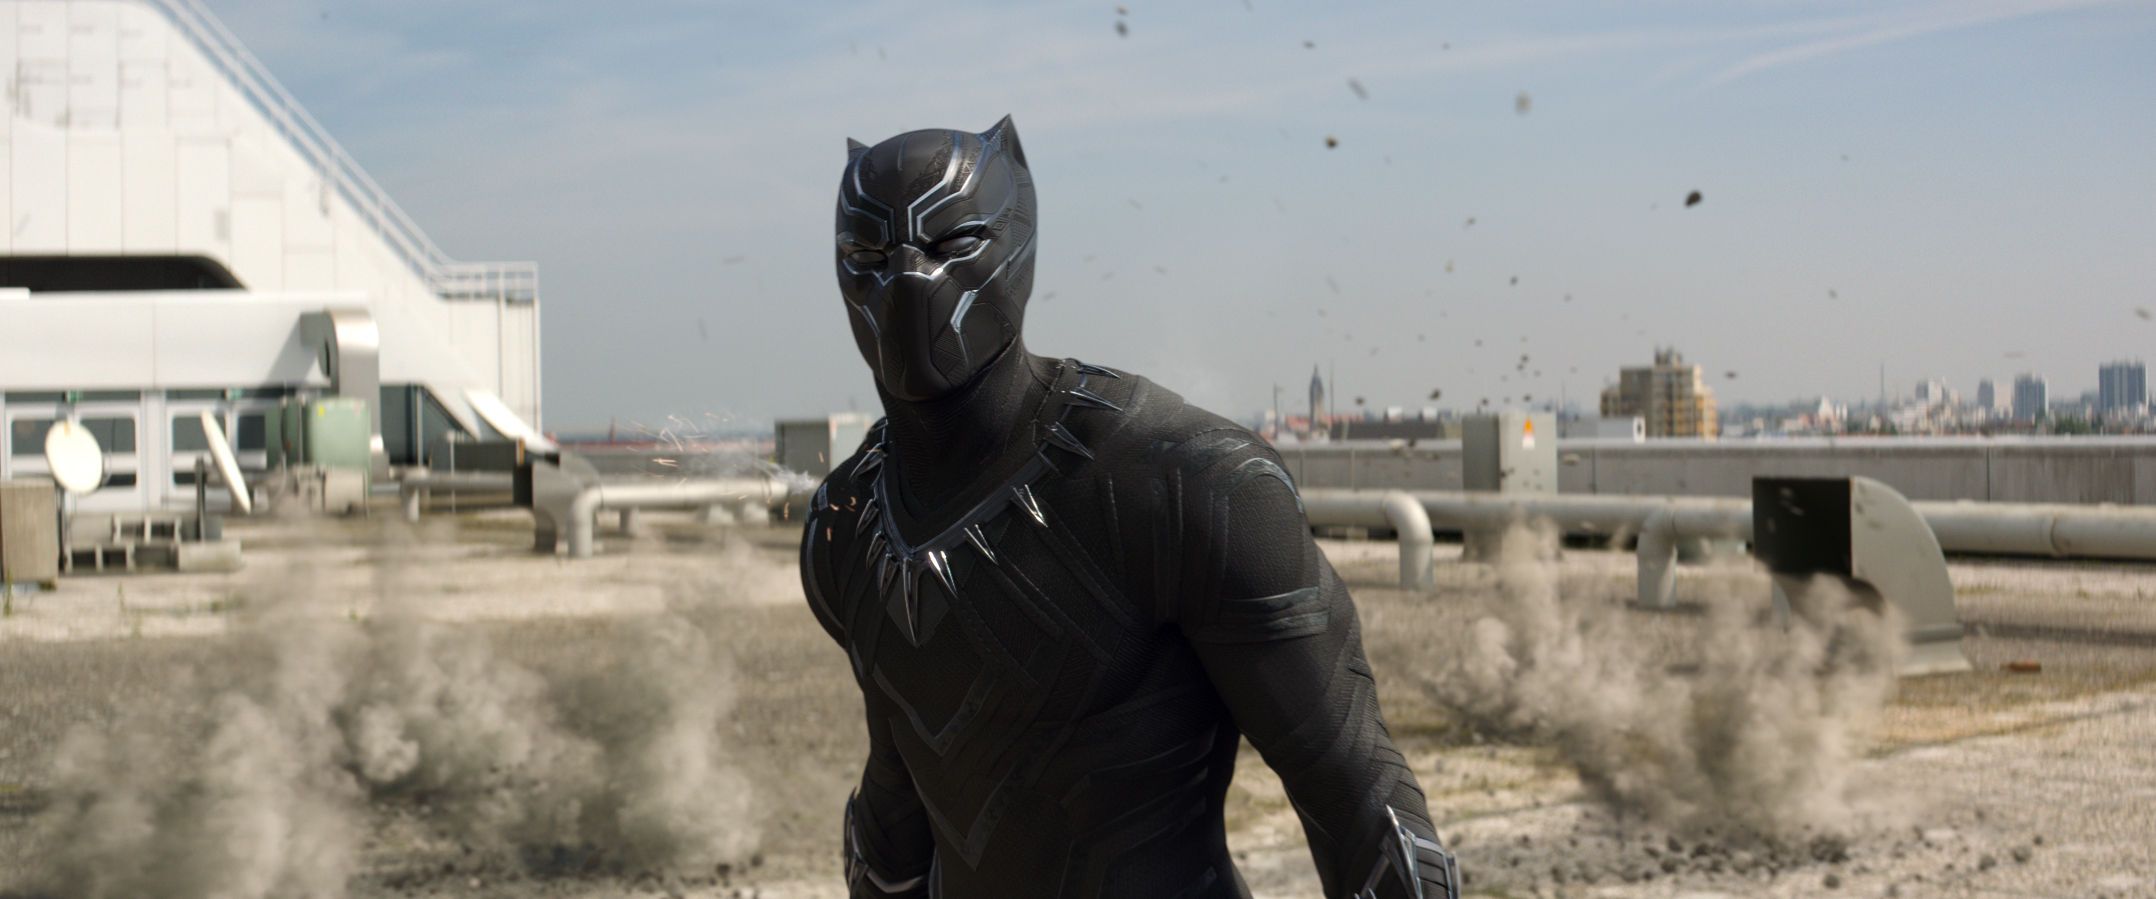 Captain America: Civil War Trailer 2 - Black Panther